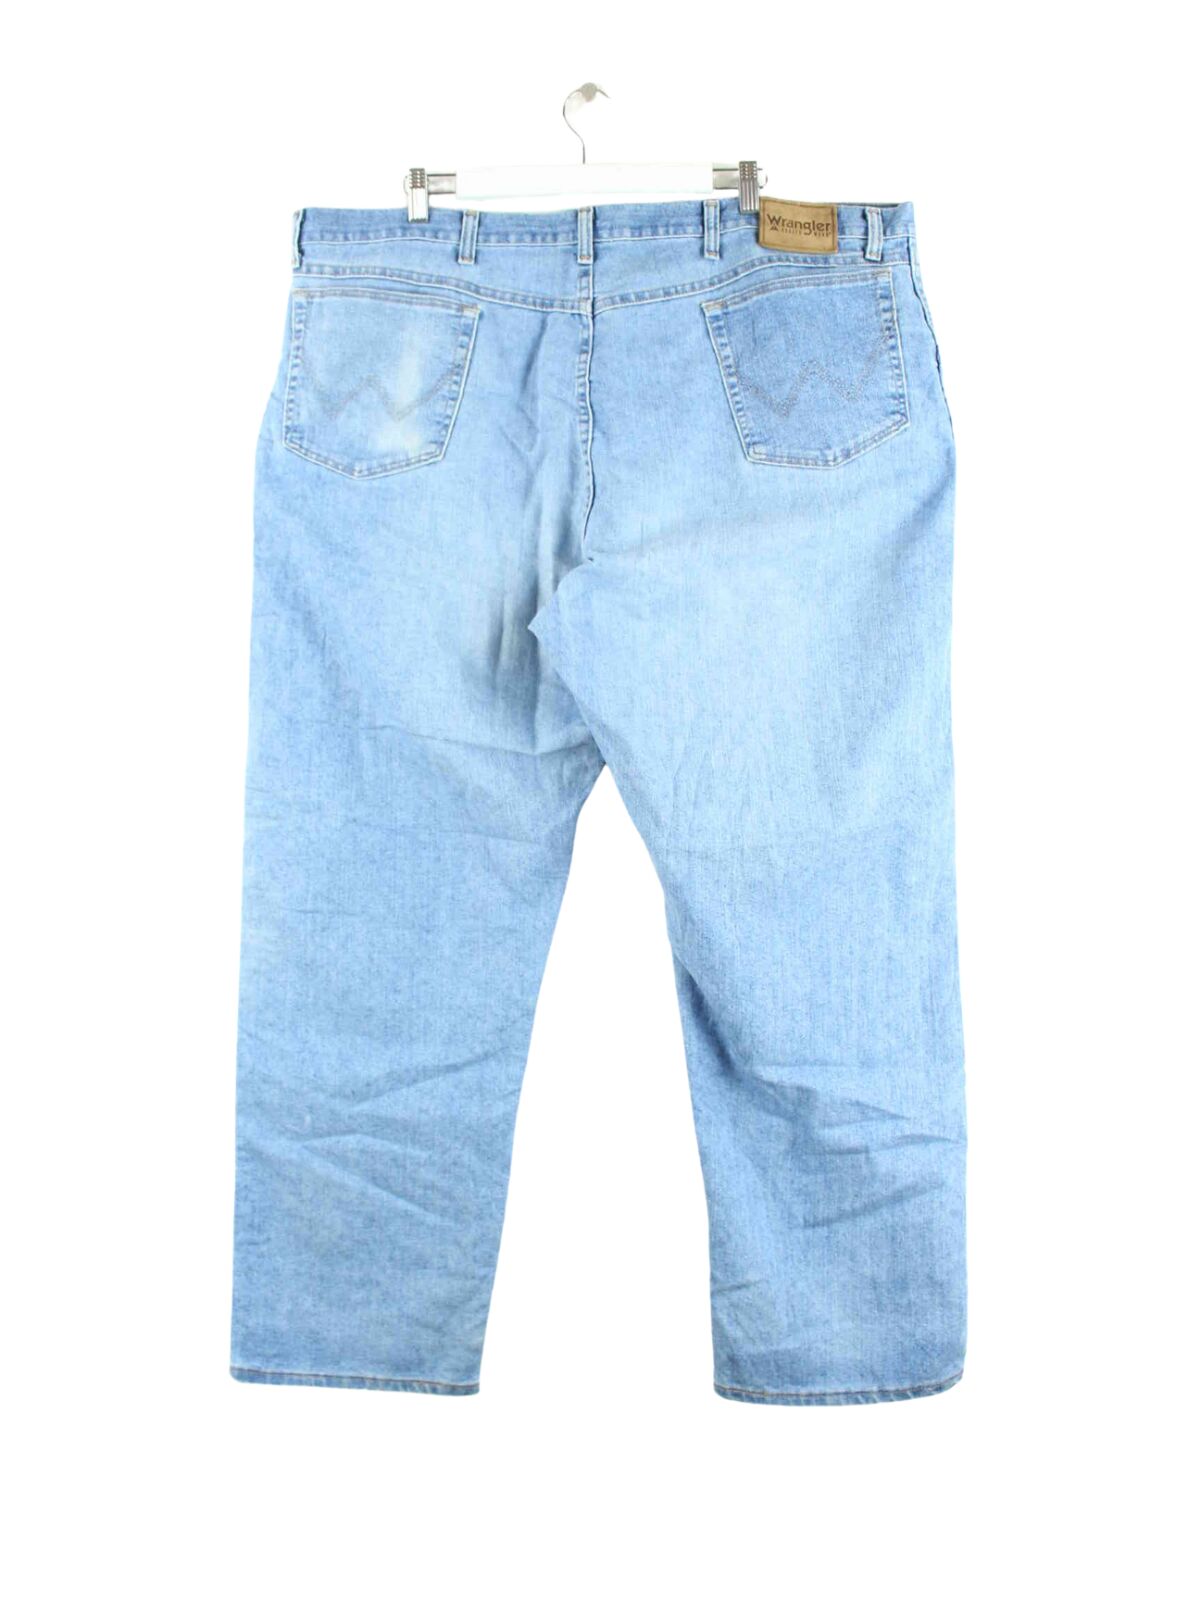 Wrangler Rugged Wear Jeans Blau W44 L30 (back image)